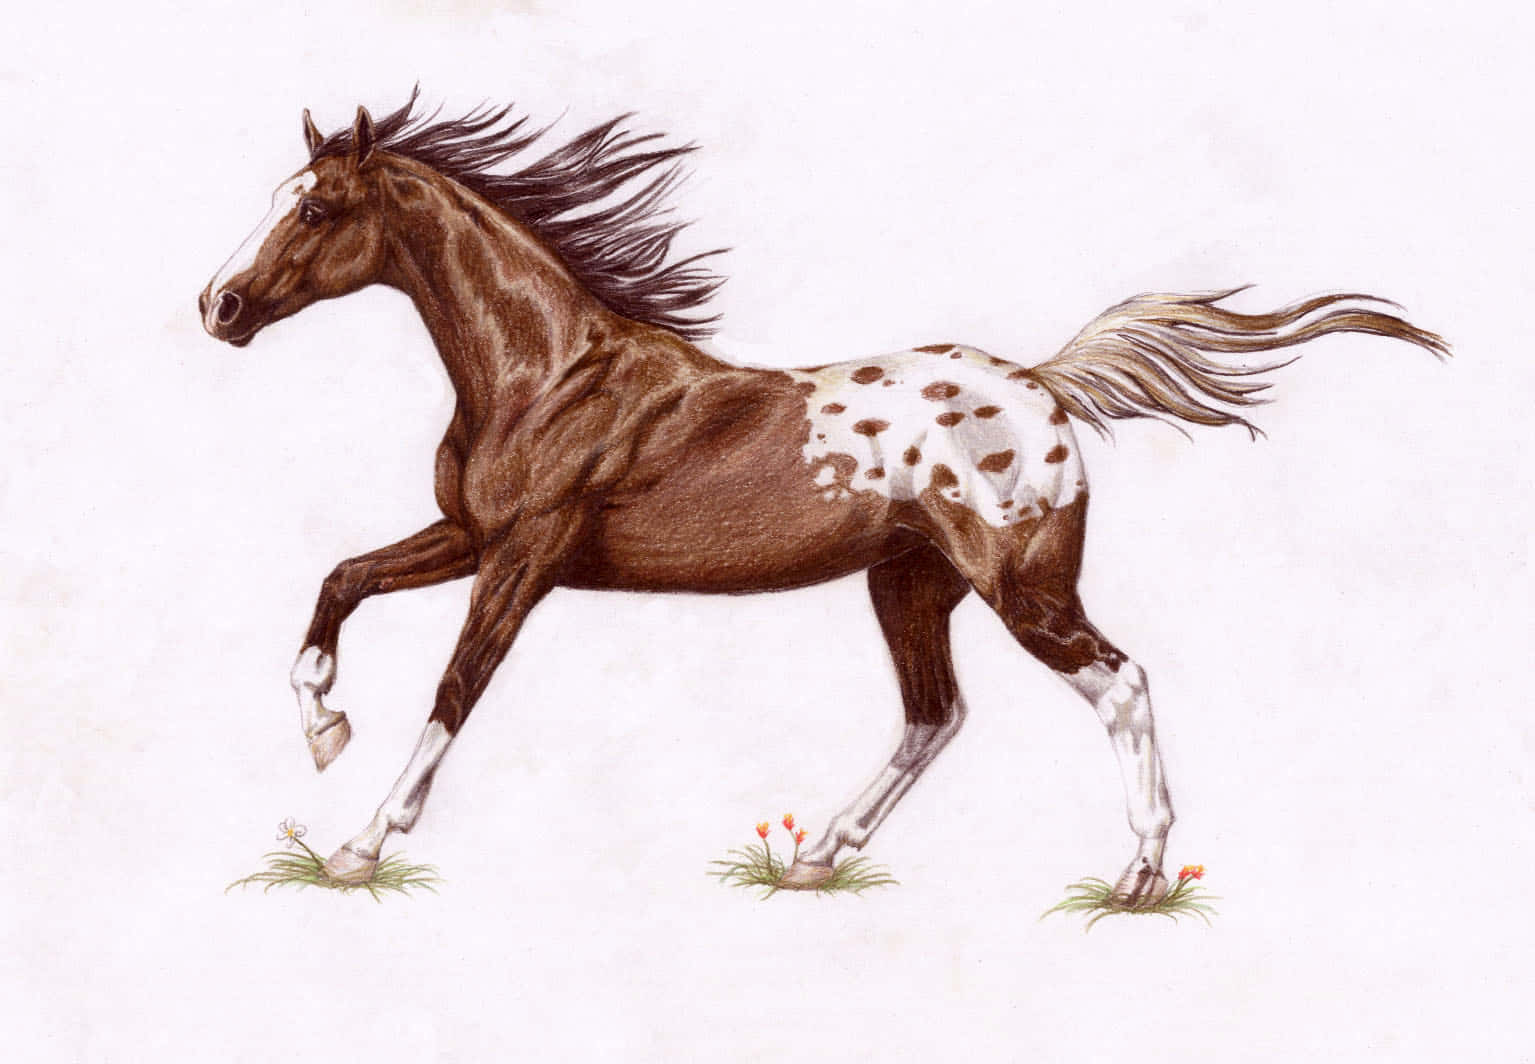 A beautiful Appaloosa Horse in all its splendor